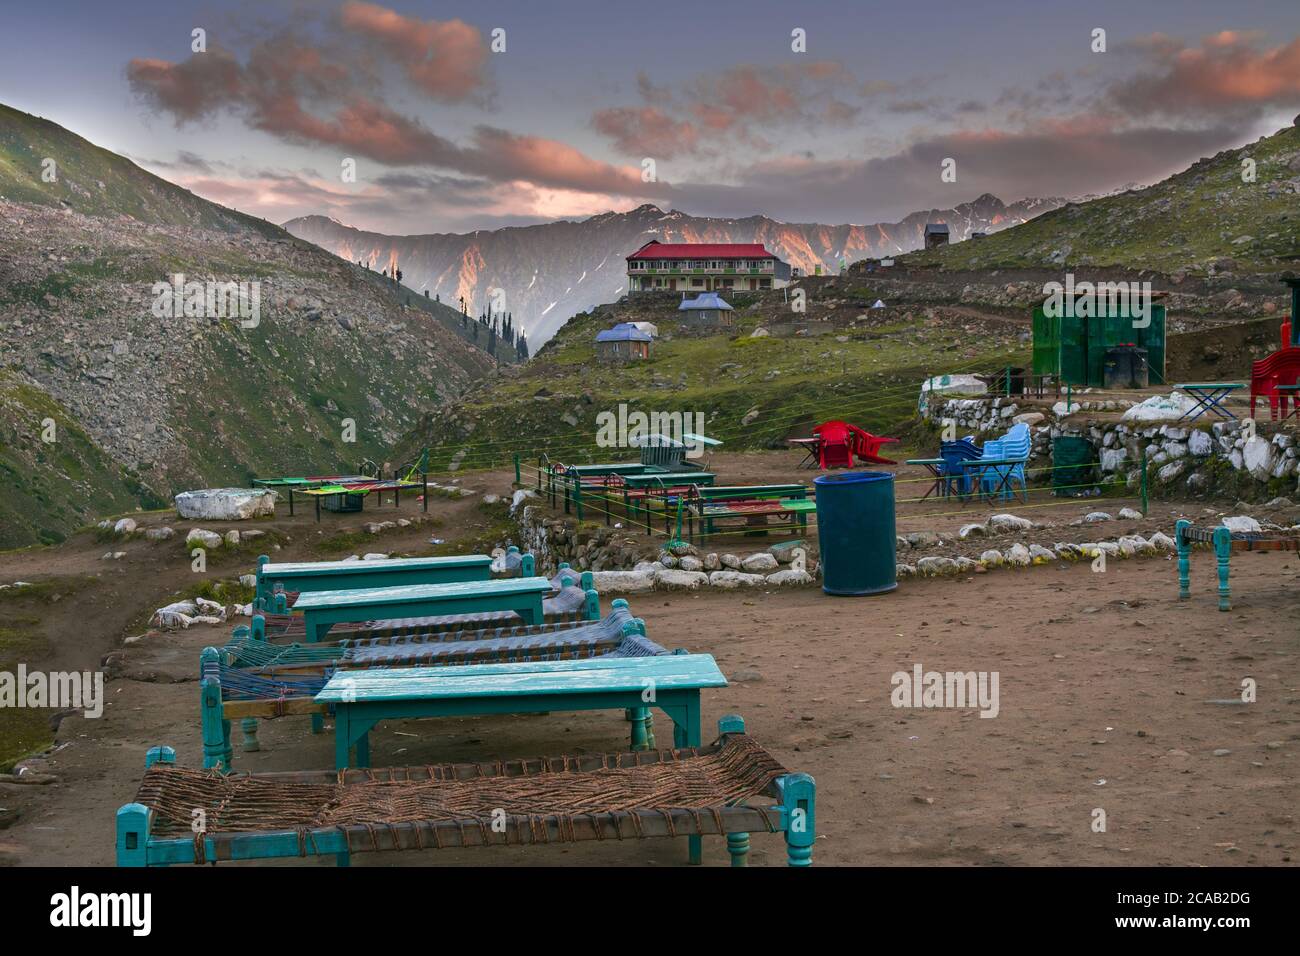 Closeup shot of tourists sitting area behind Naran kaghan saif ul malook lake in Pakistan Stock Photo